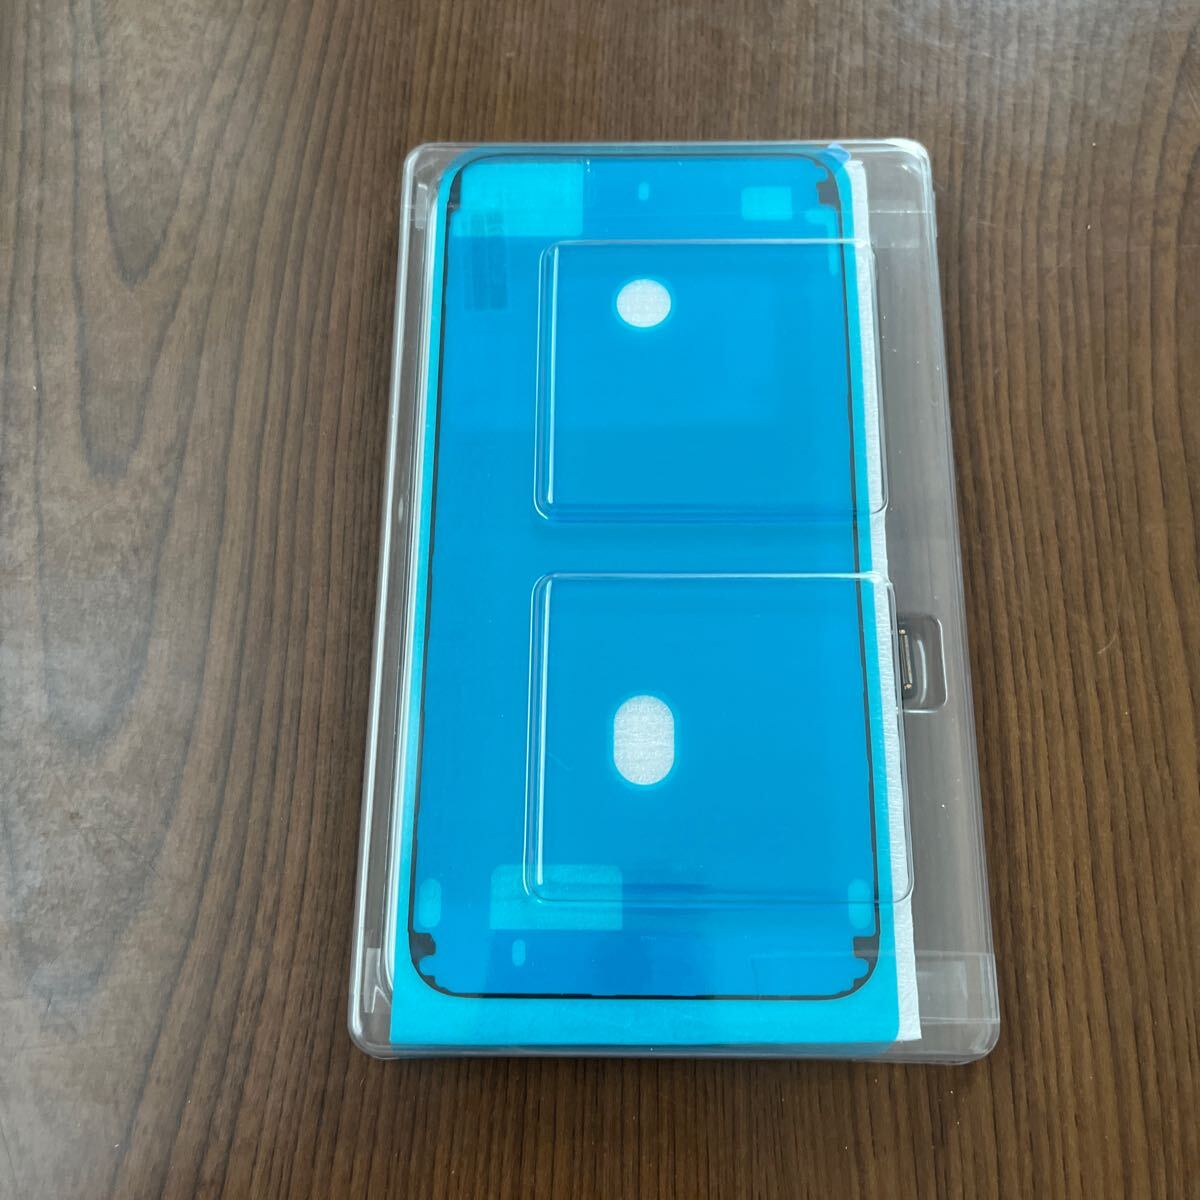 605p1310☆ Brinonac iPhone 8 Plus LCD 液晶パネル 5.5 3Dタッチ付き フロントパネル 修理用交換用LCD 修理工具付き(iPhone 8Plus 黑) 